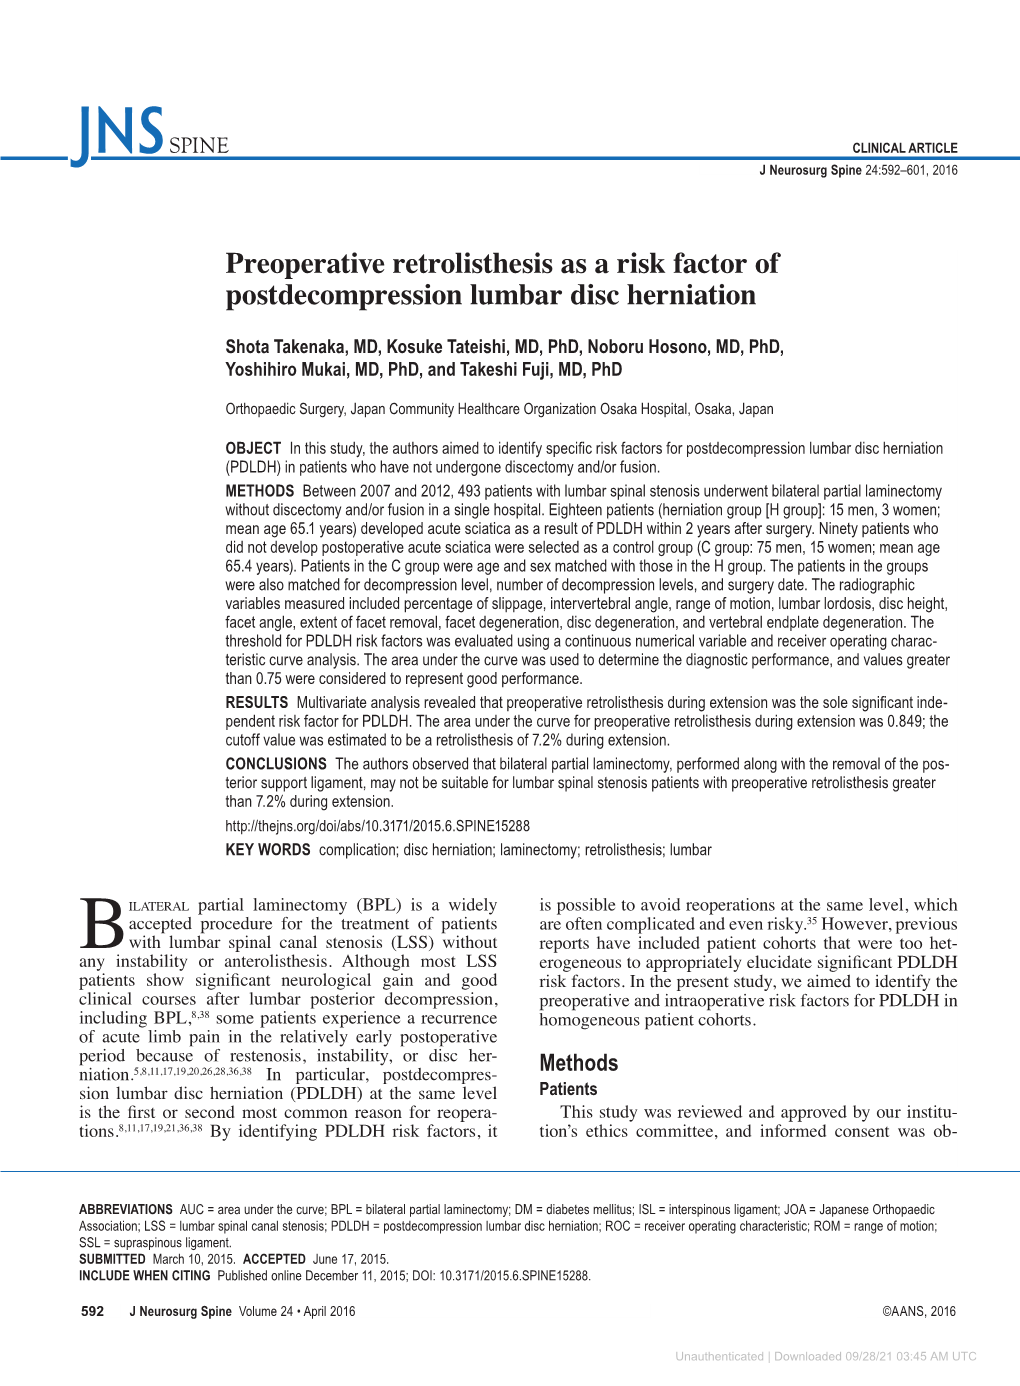 Preoperative Retrolisthesis As a Risk Factor of Postdecompression Lumbar Disc Herniation